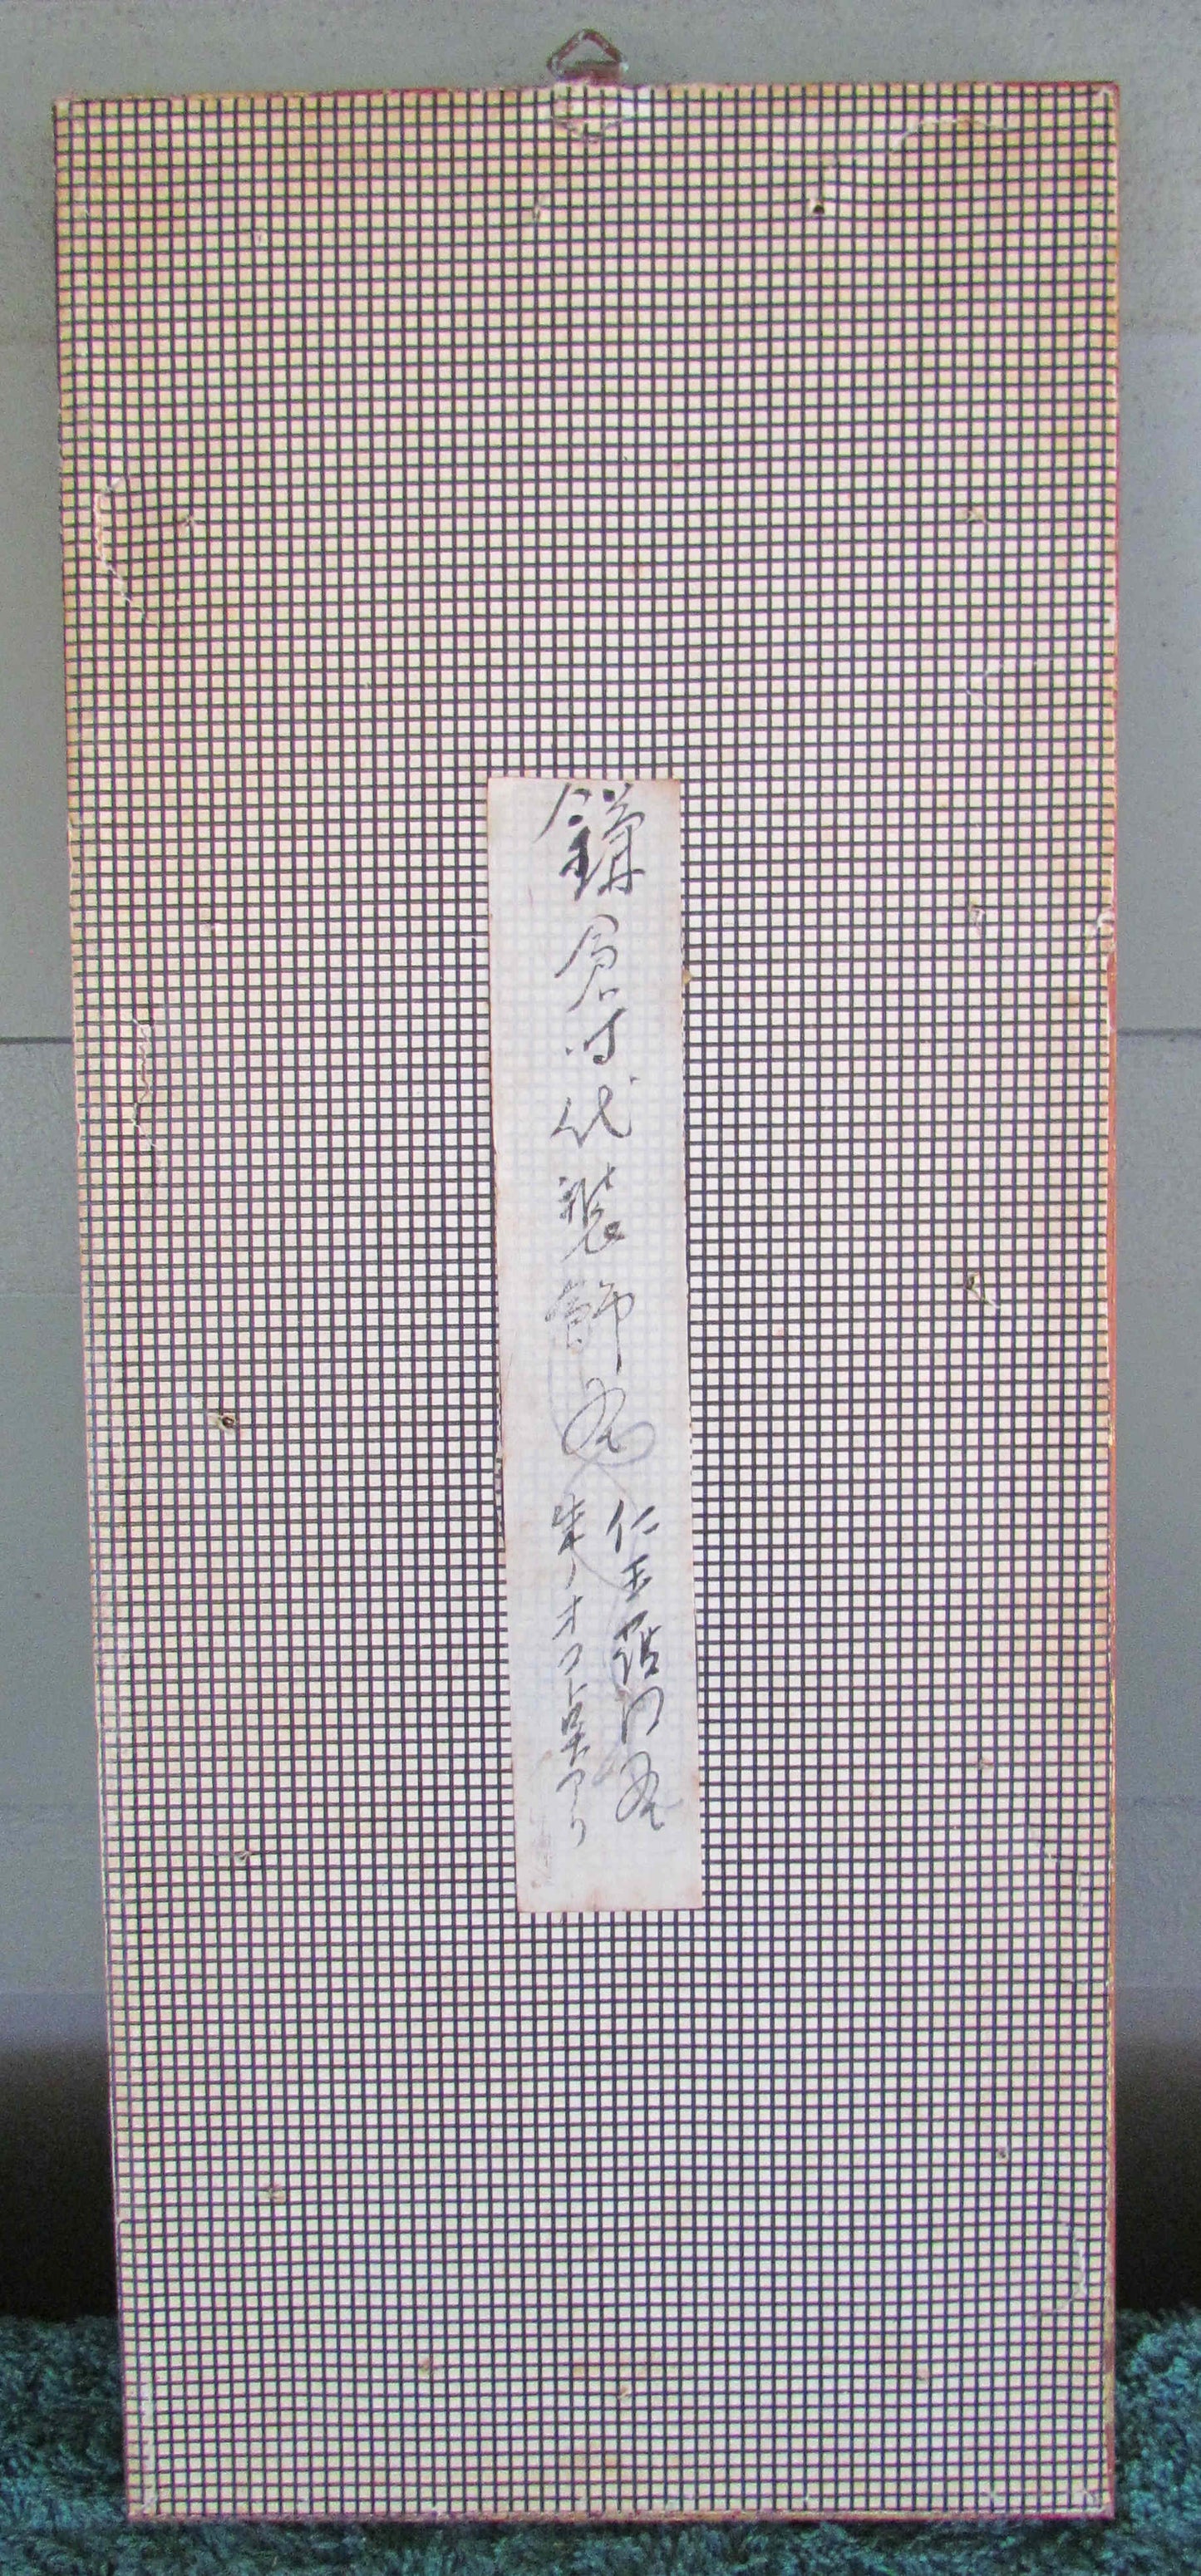 Japanese Calligraphy Artwork circa 1960